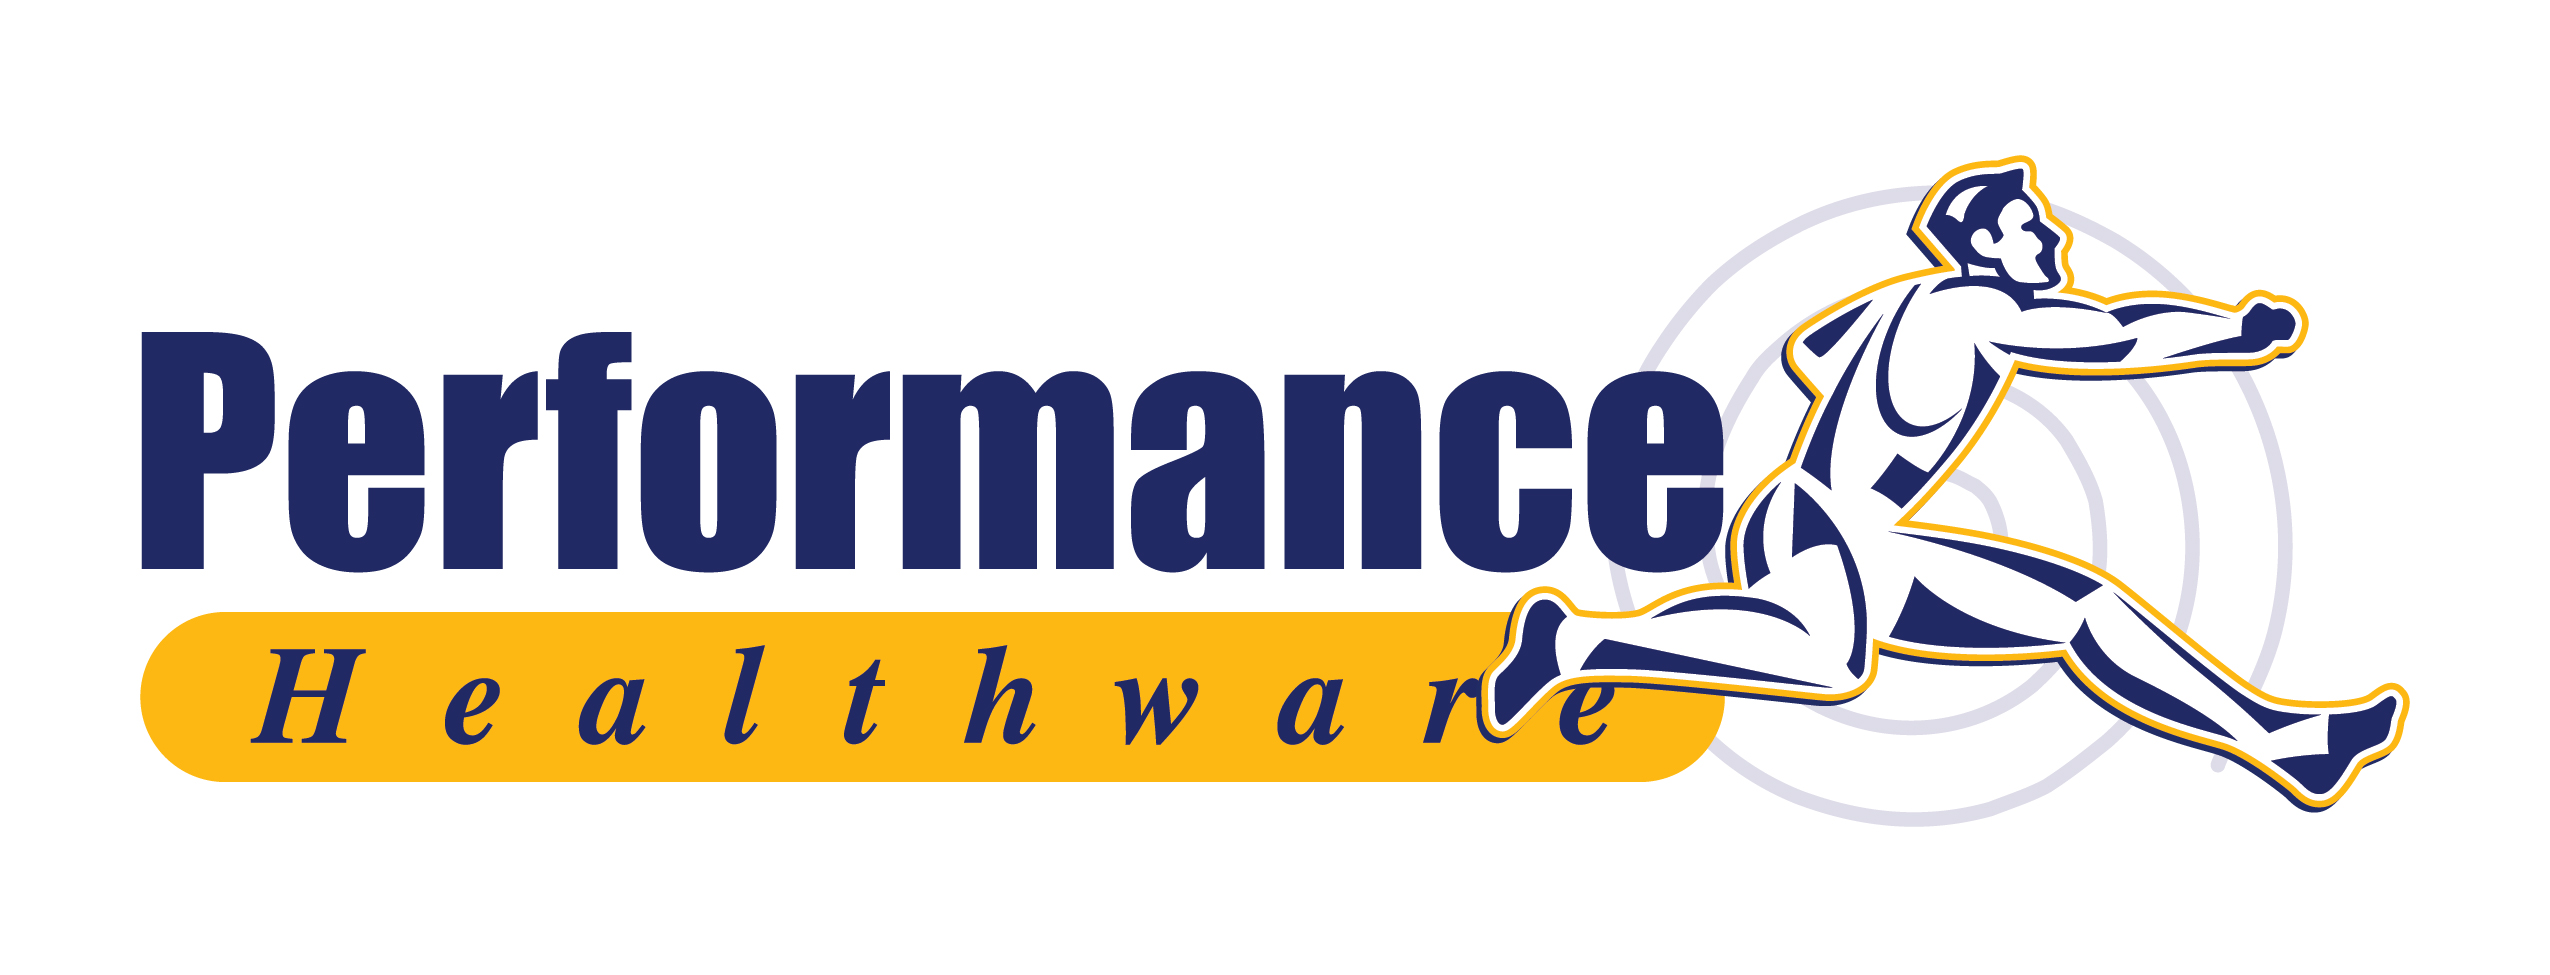 Performance Healthware